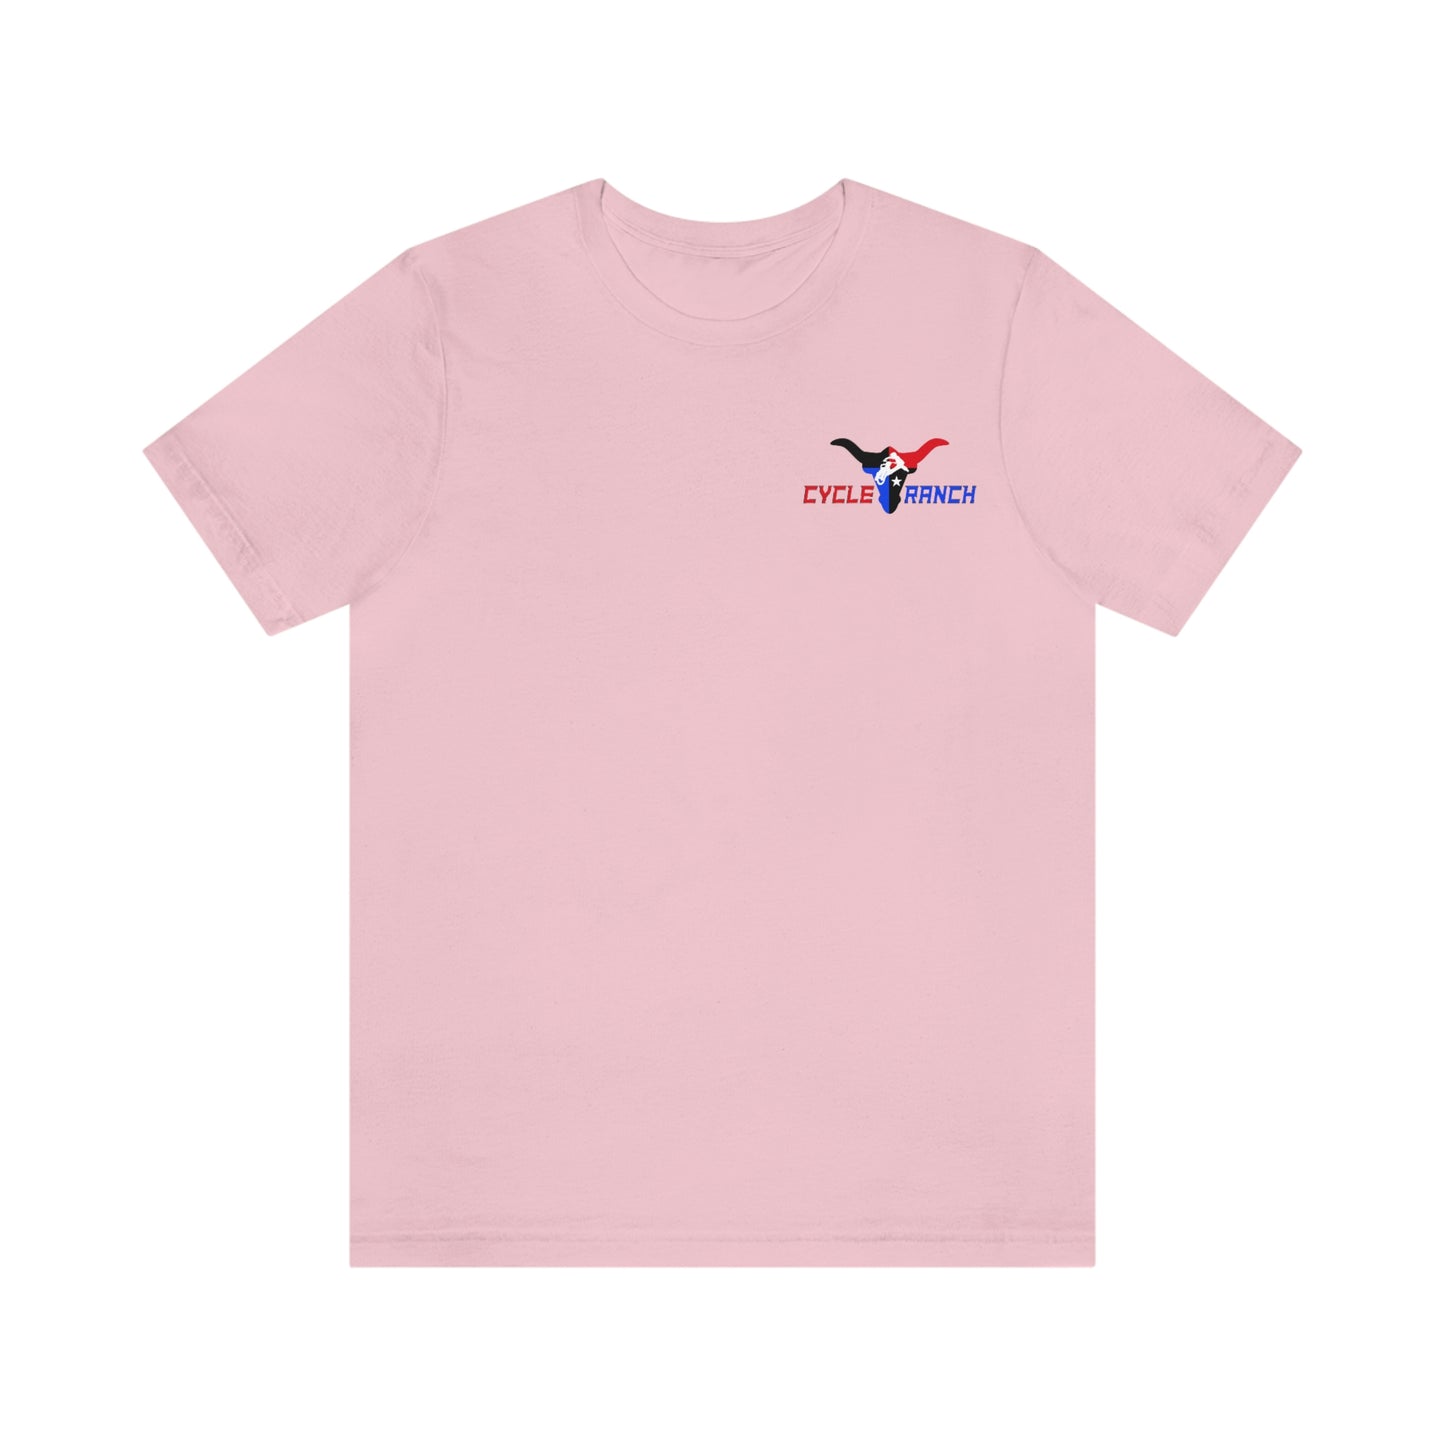 Cycle Ranch Classic T Shirt - Soft